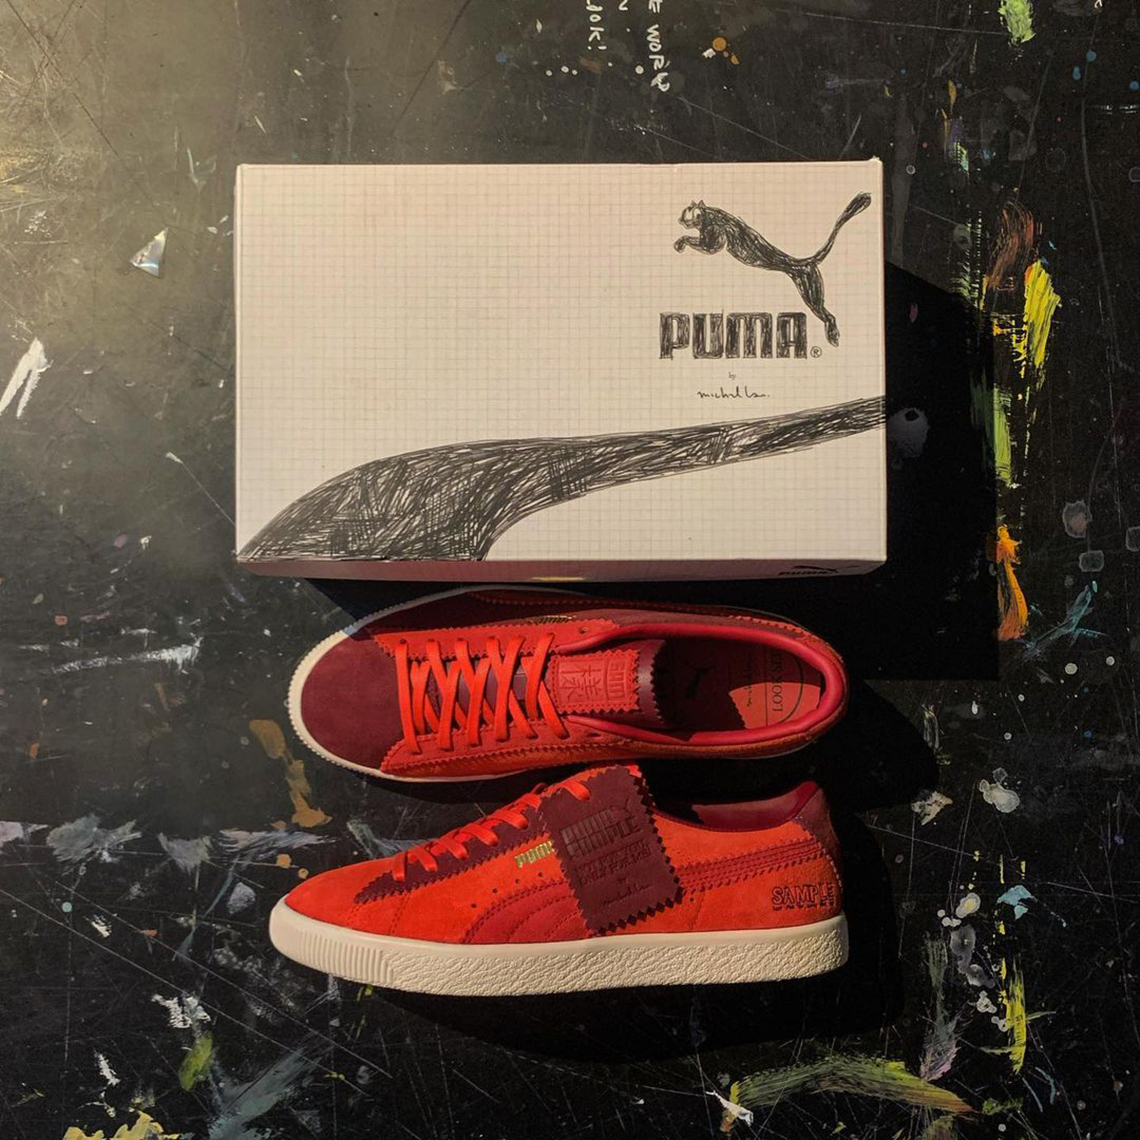 puma shox shoes